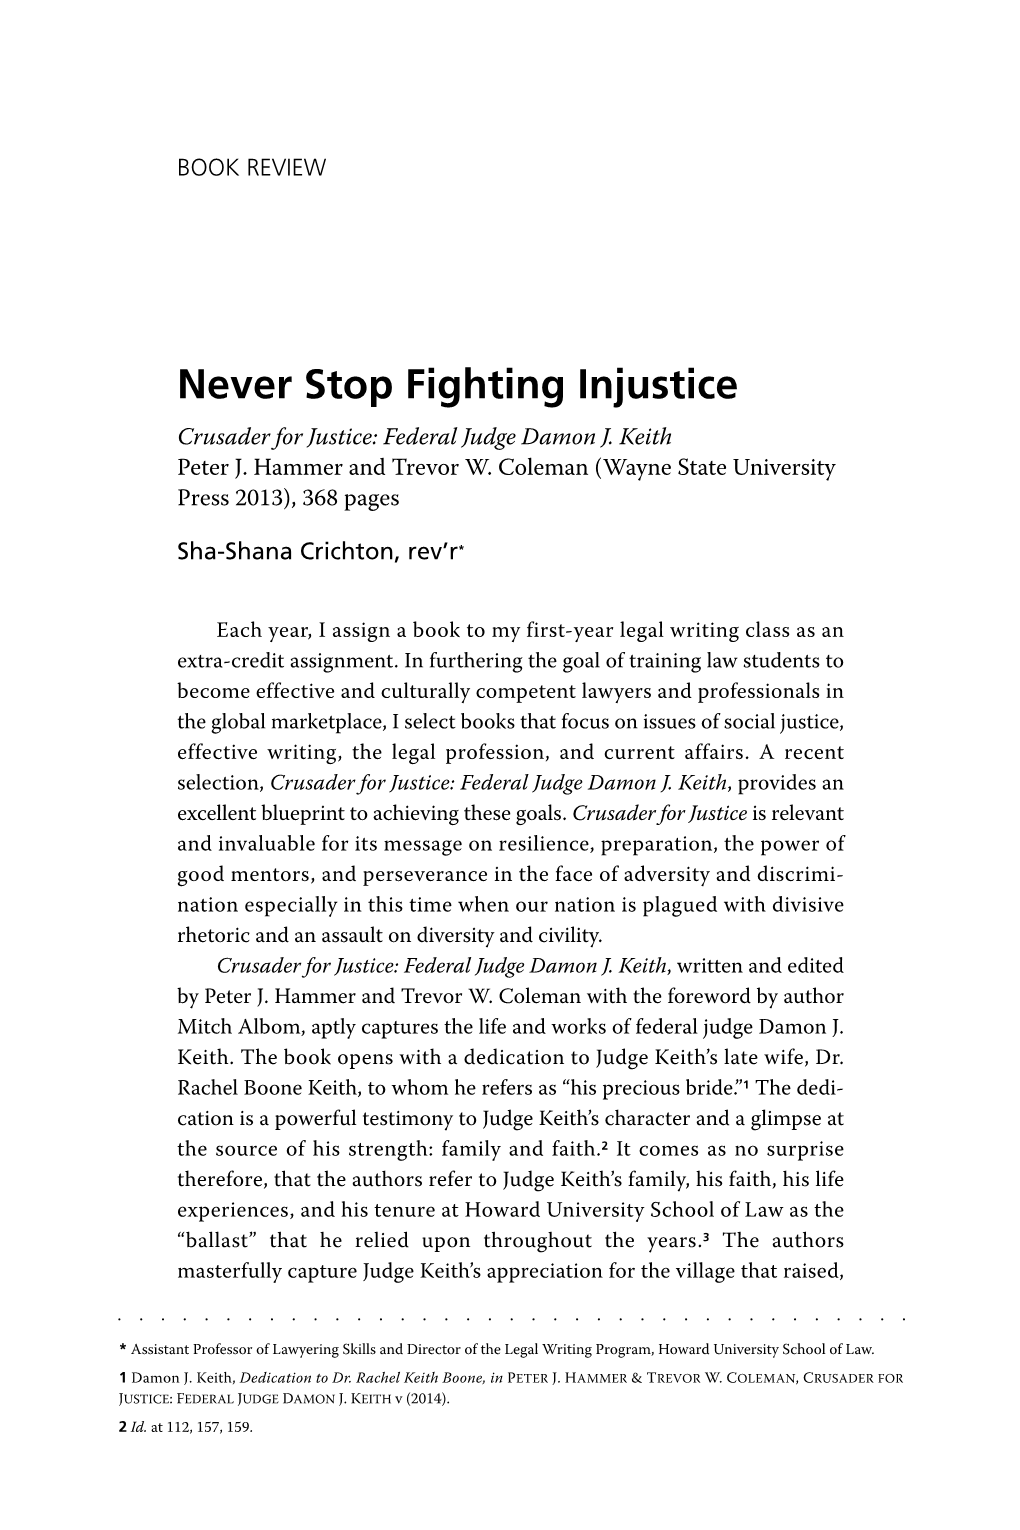 Never Stop Fighting Injustice Crusader for Justice: Federal Judge Damon J